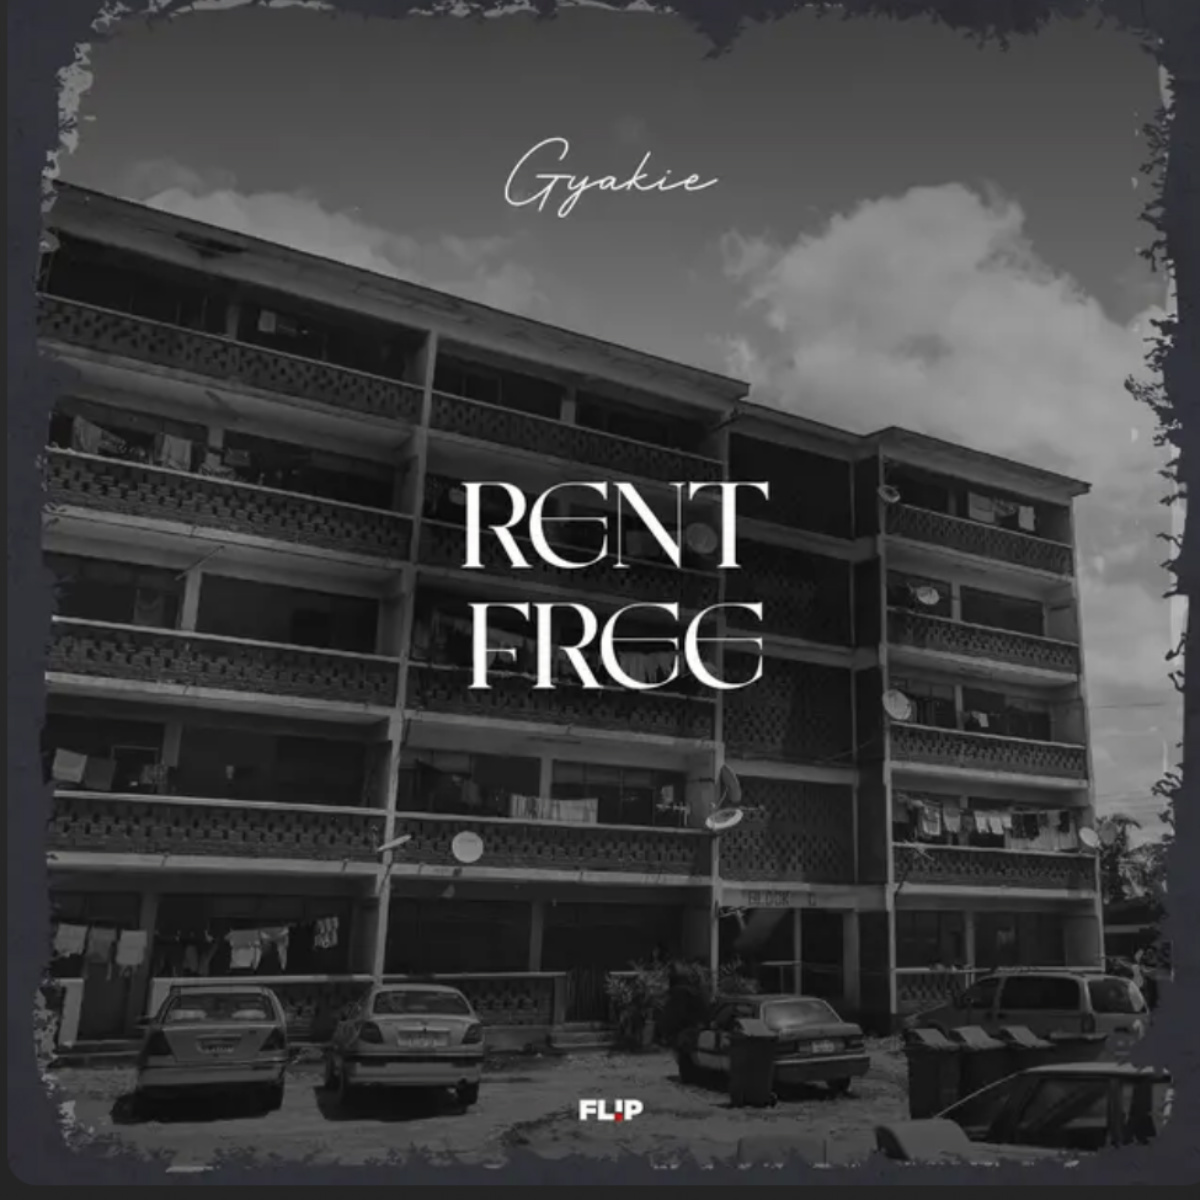 Rent Free by Gyakie